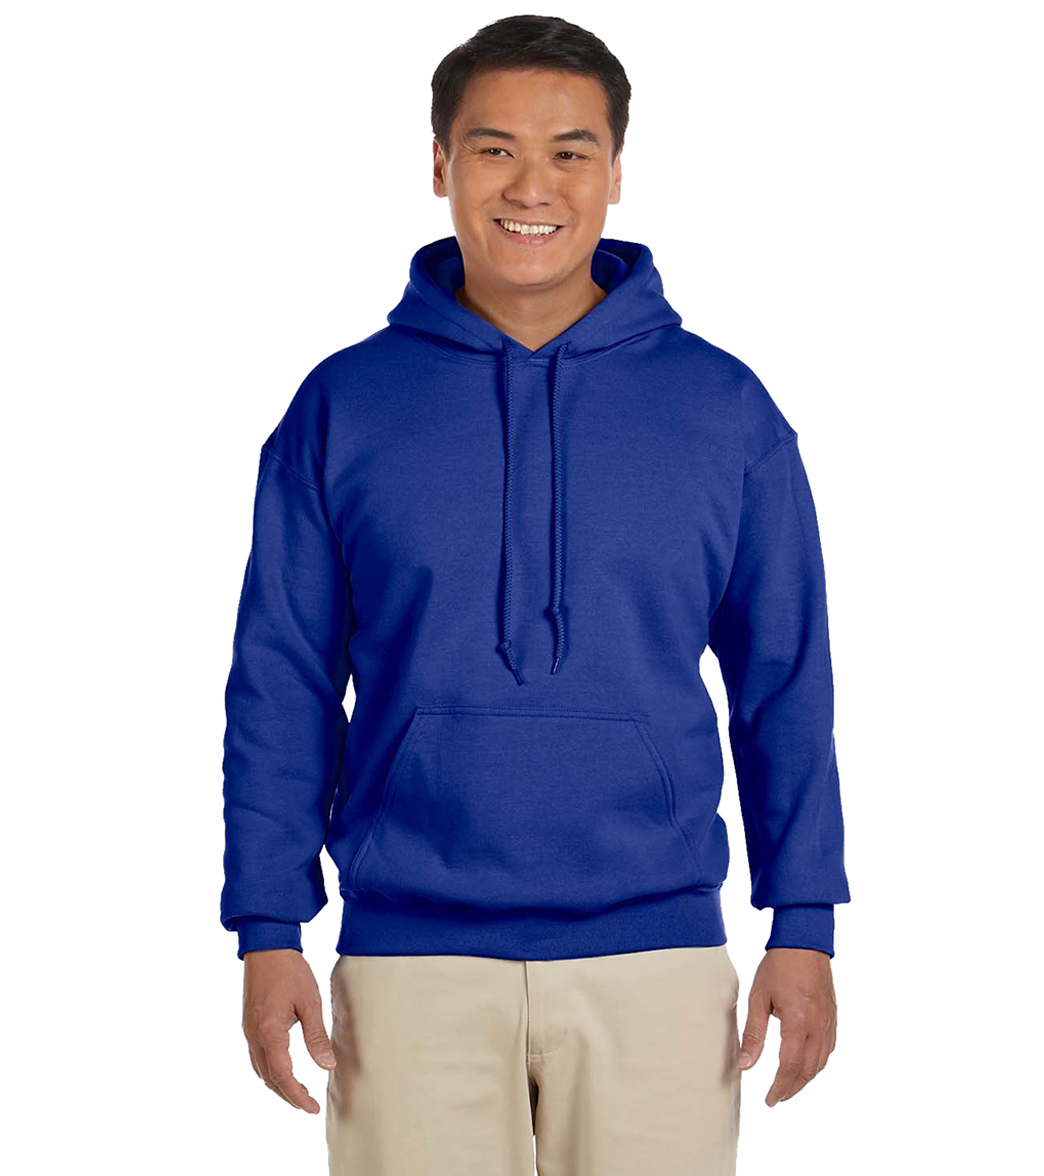 Men's Heavy Blend Hooded Sweatshirt - Royal Xxl Cotton/Polyester - Swimoutlet.com